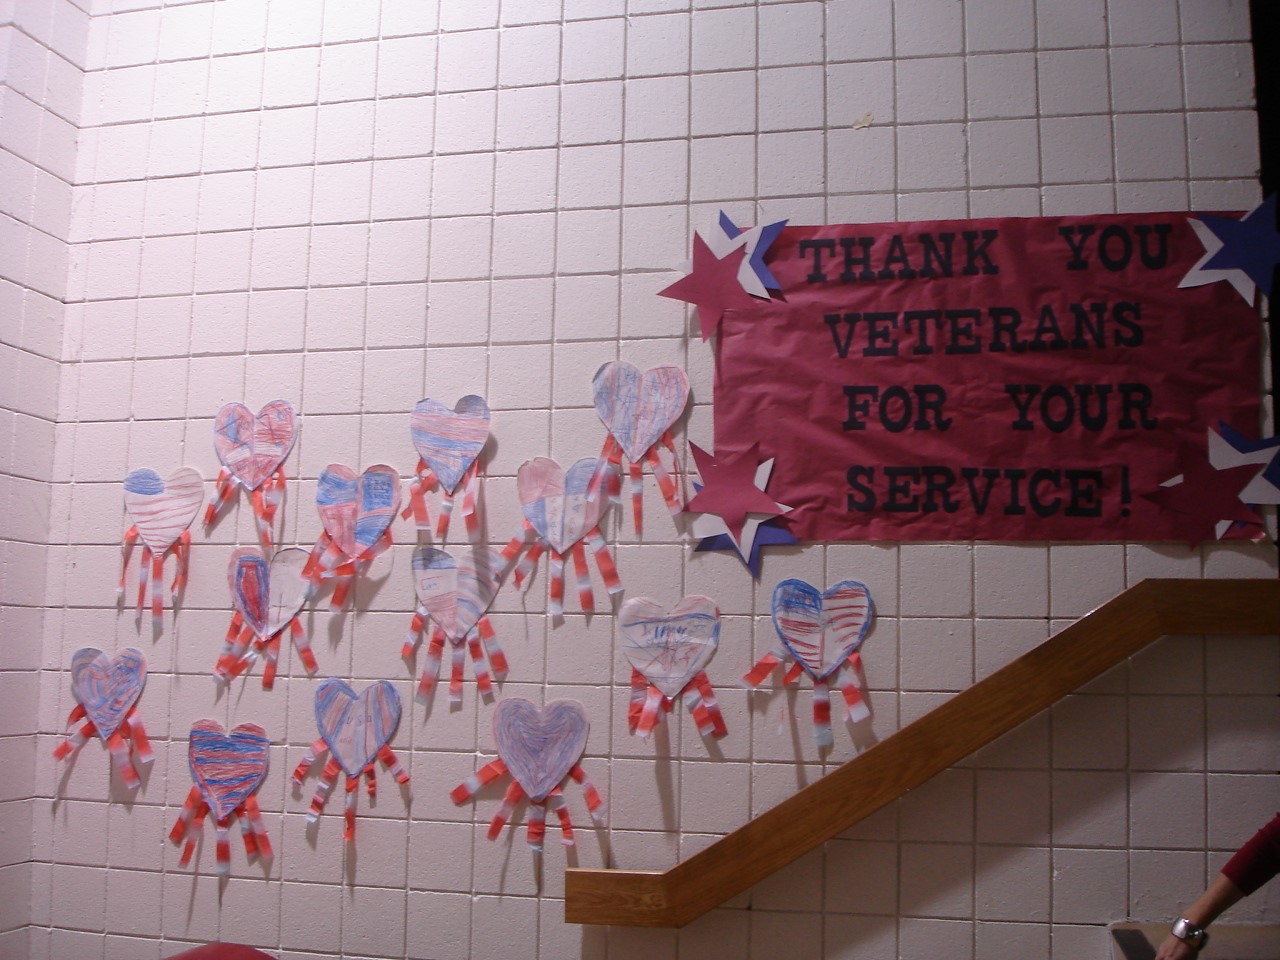 Veteran's Day 2007